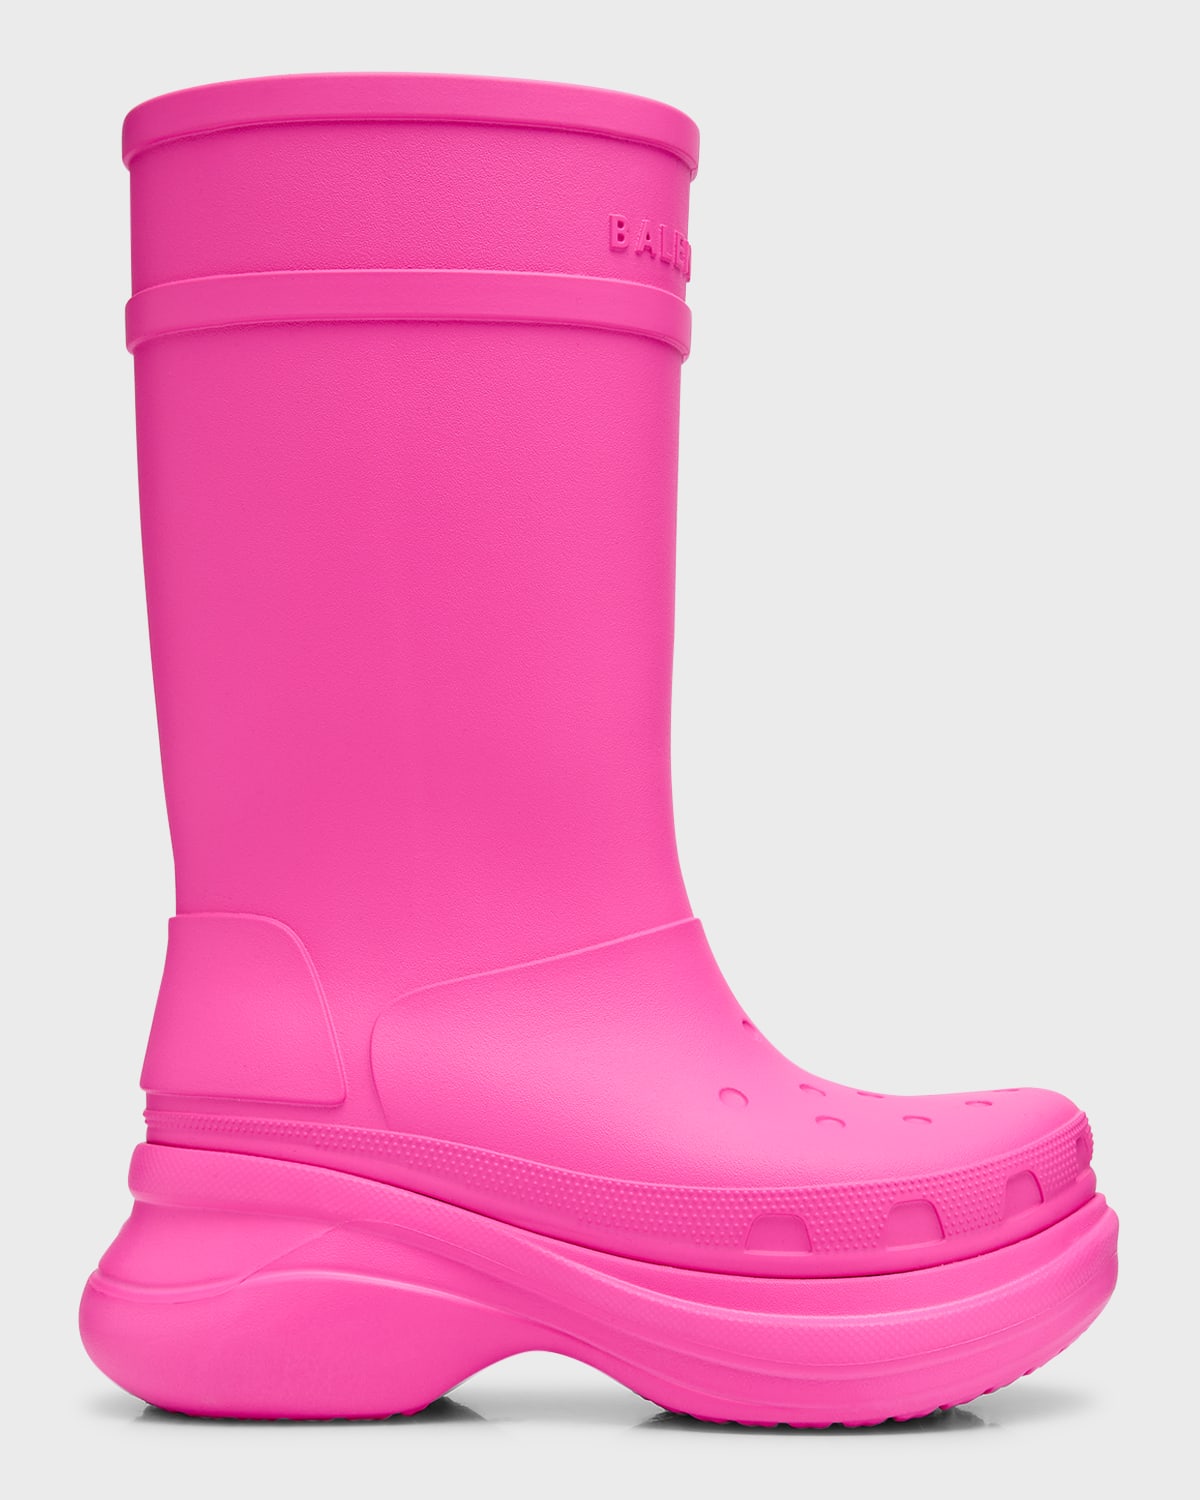 x Croc Rubber Rain Boots